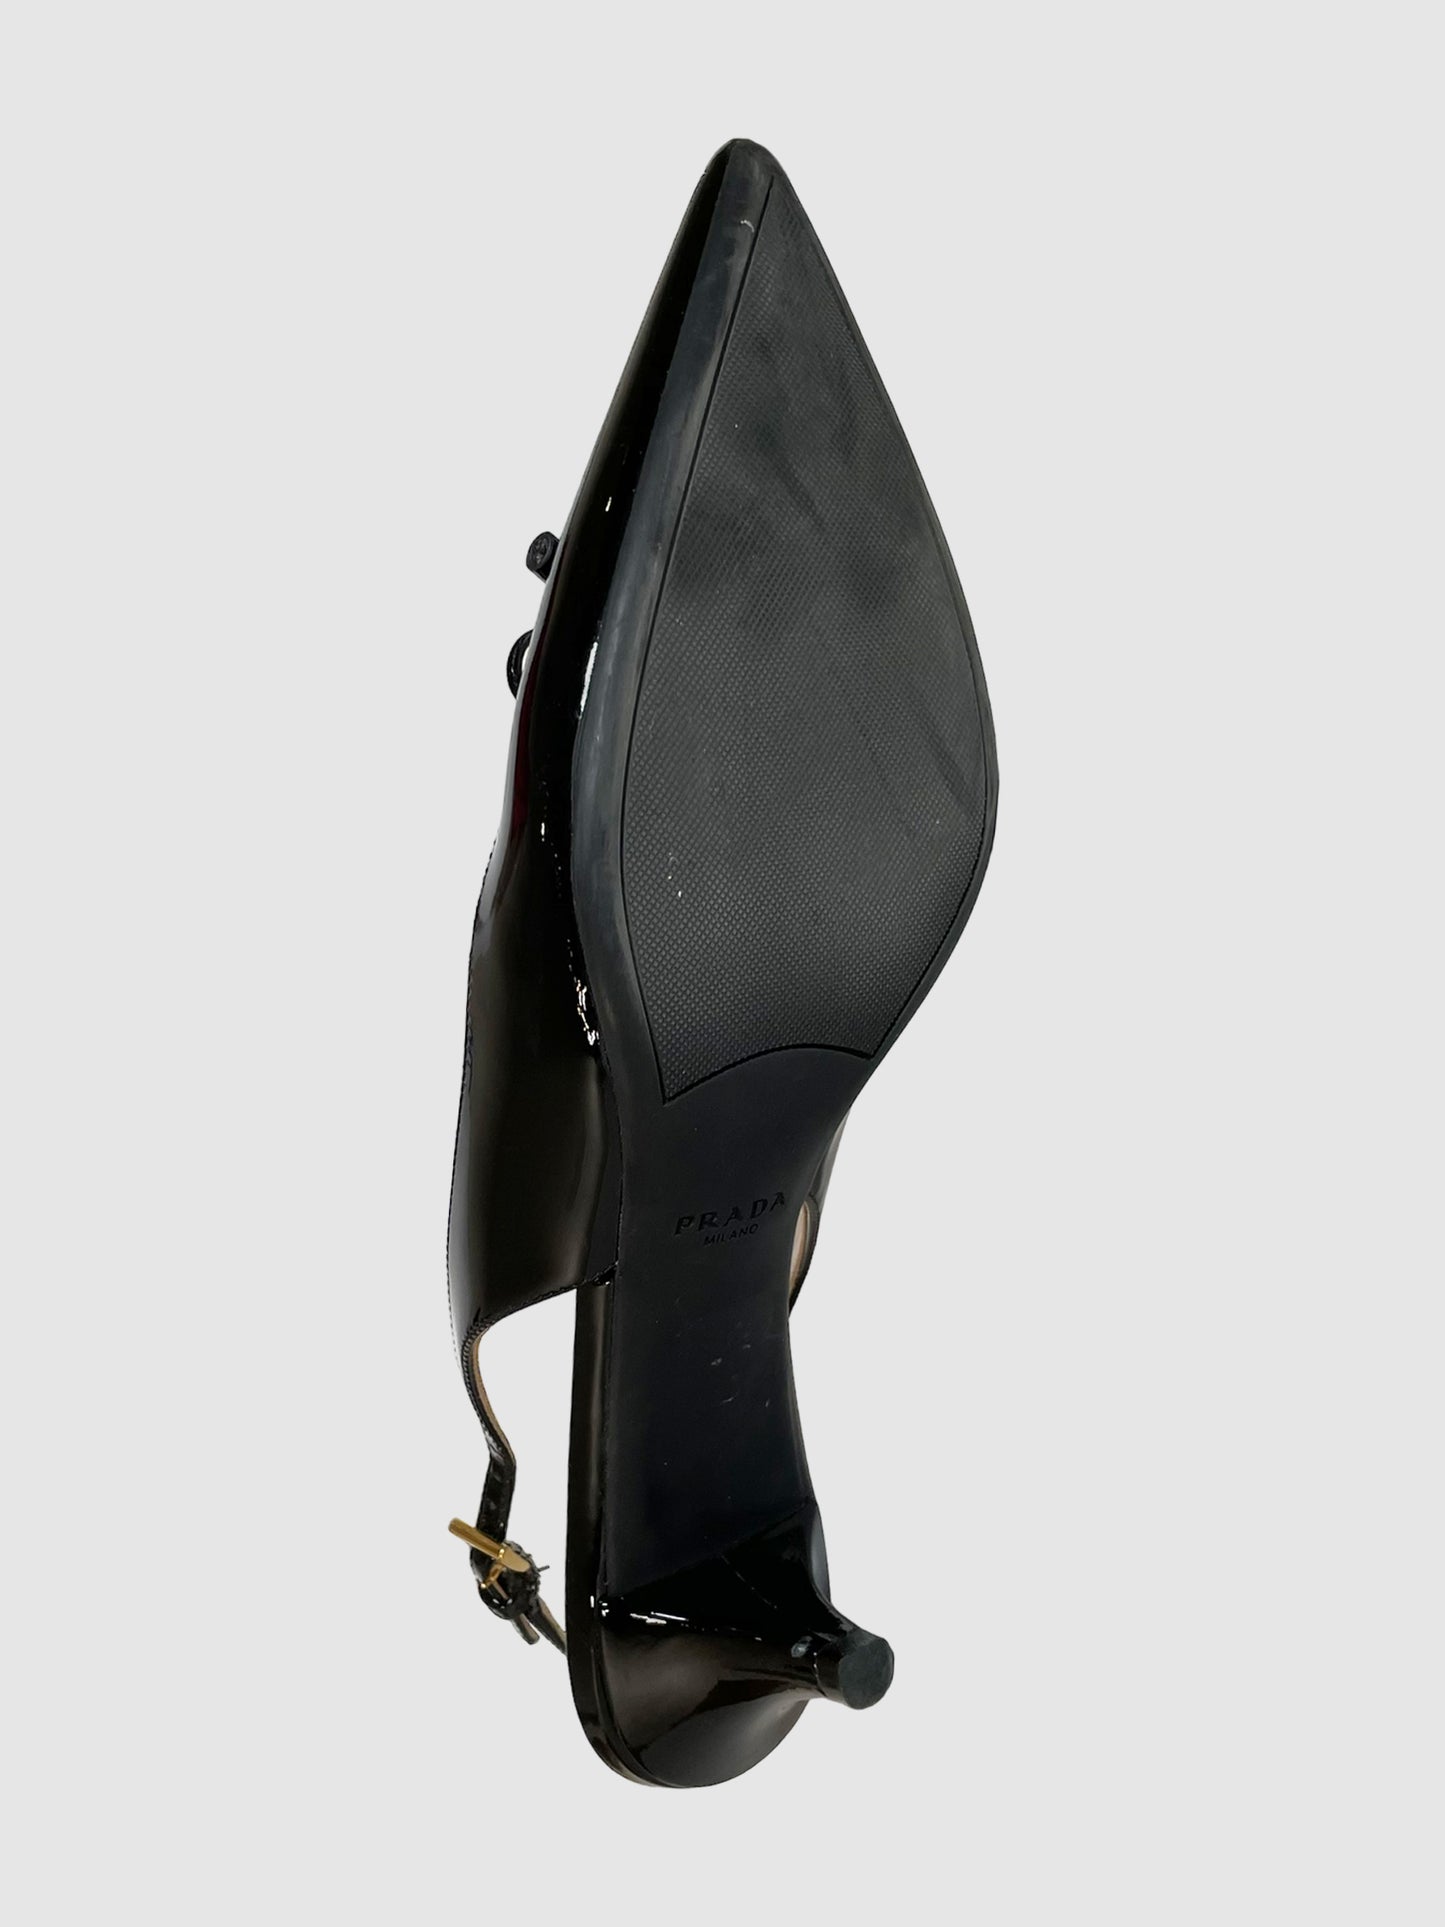 Prada Patent Leather Slingback Heels - Size 38.5